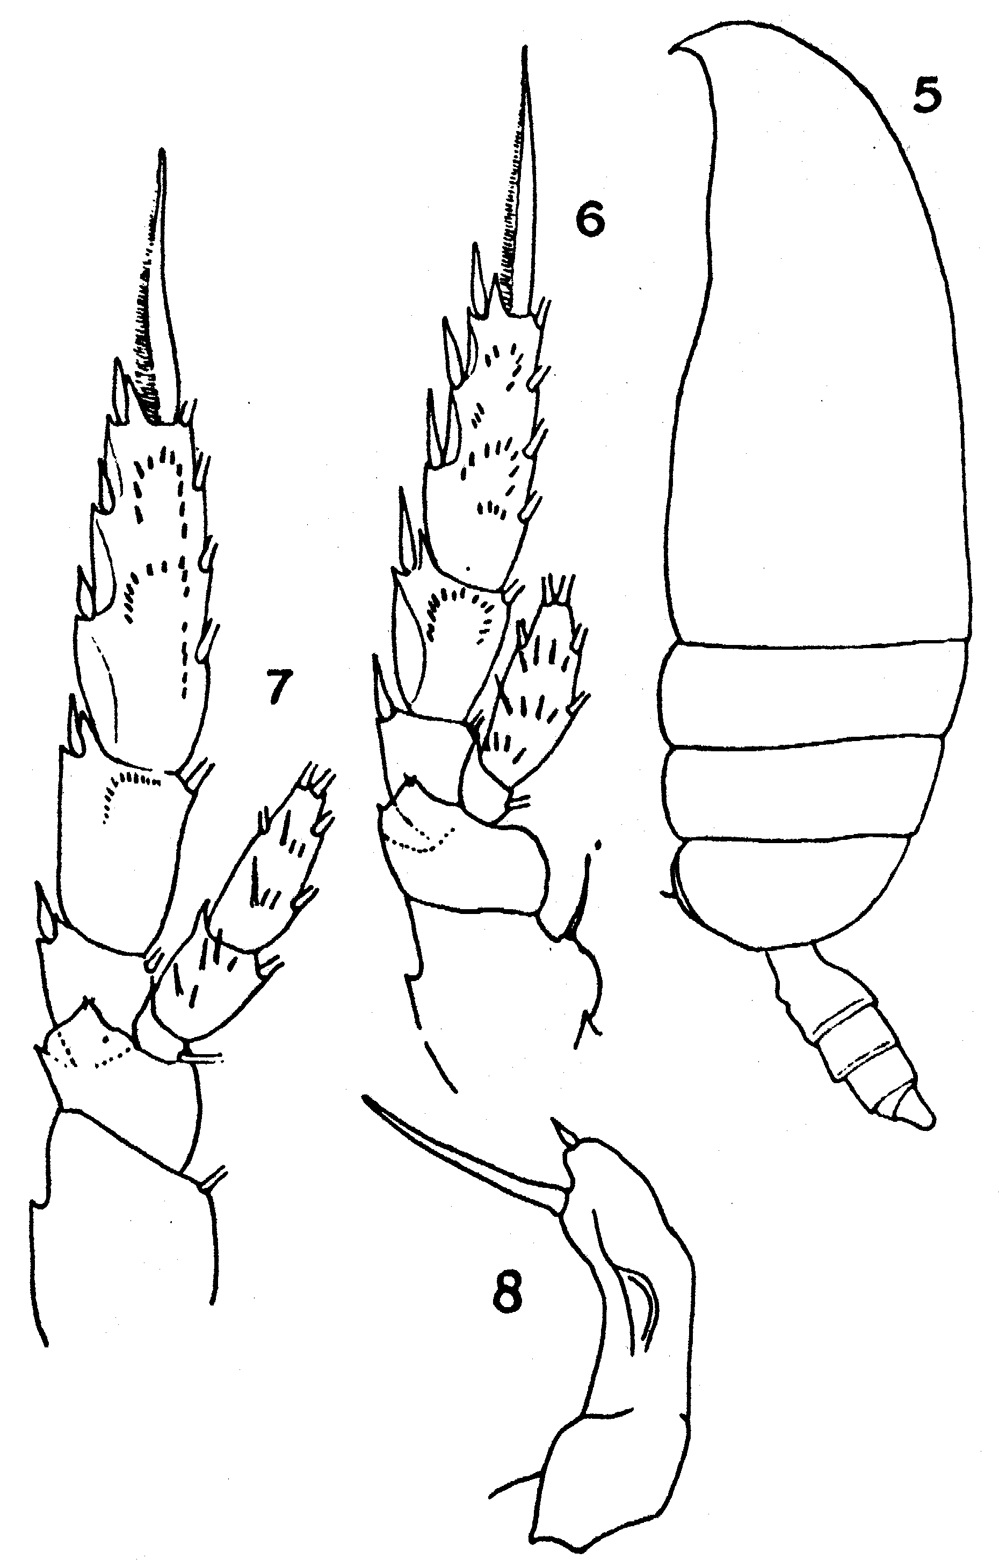 Species Pseudoamallothrix laminata - Plate 6 of morphological figures